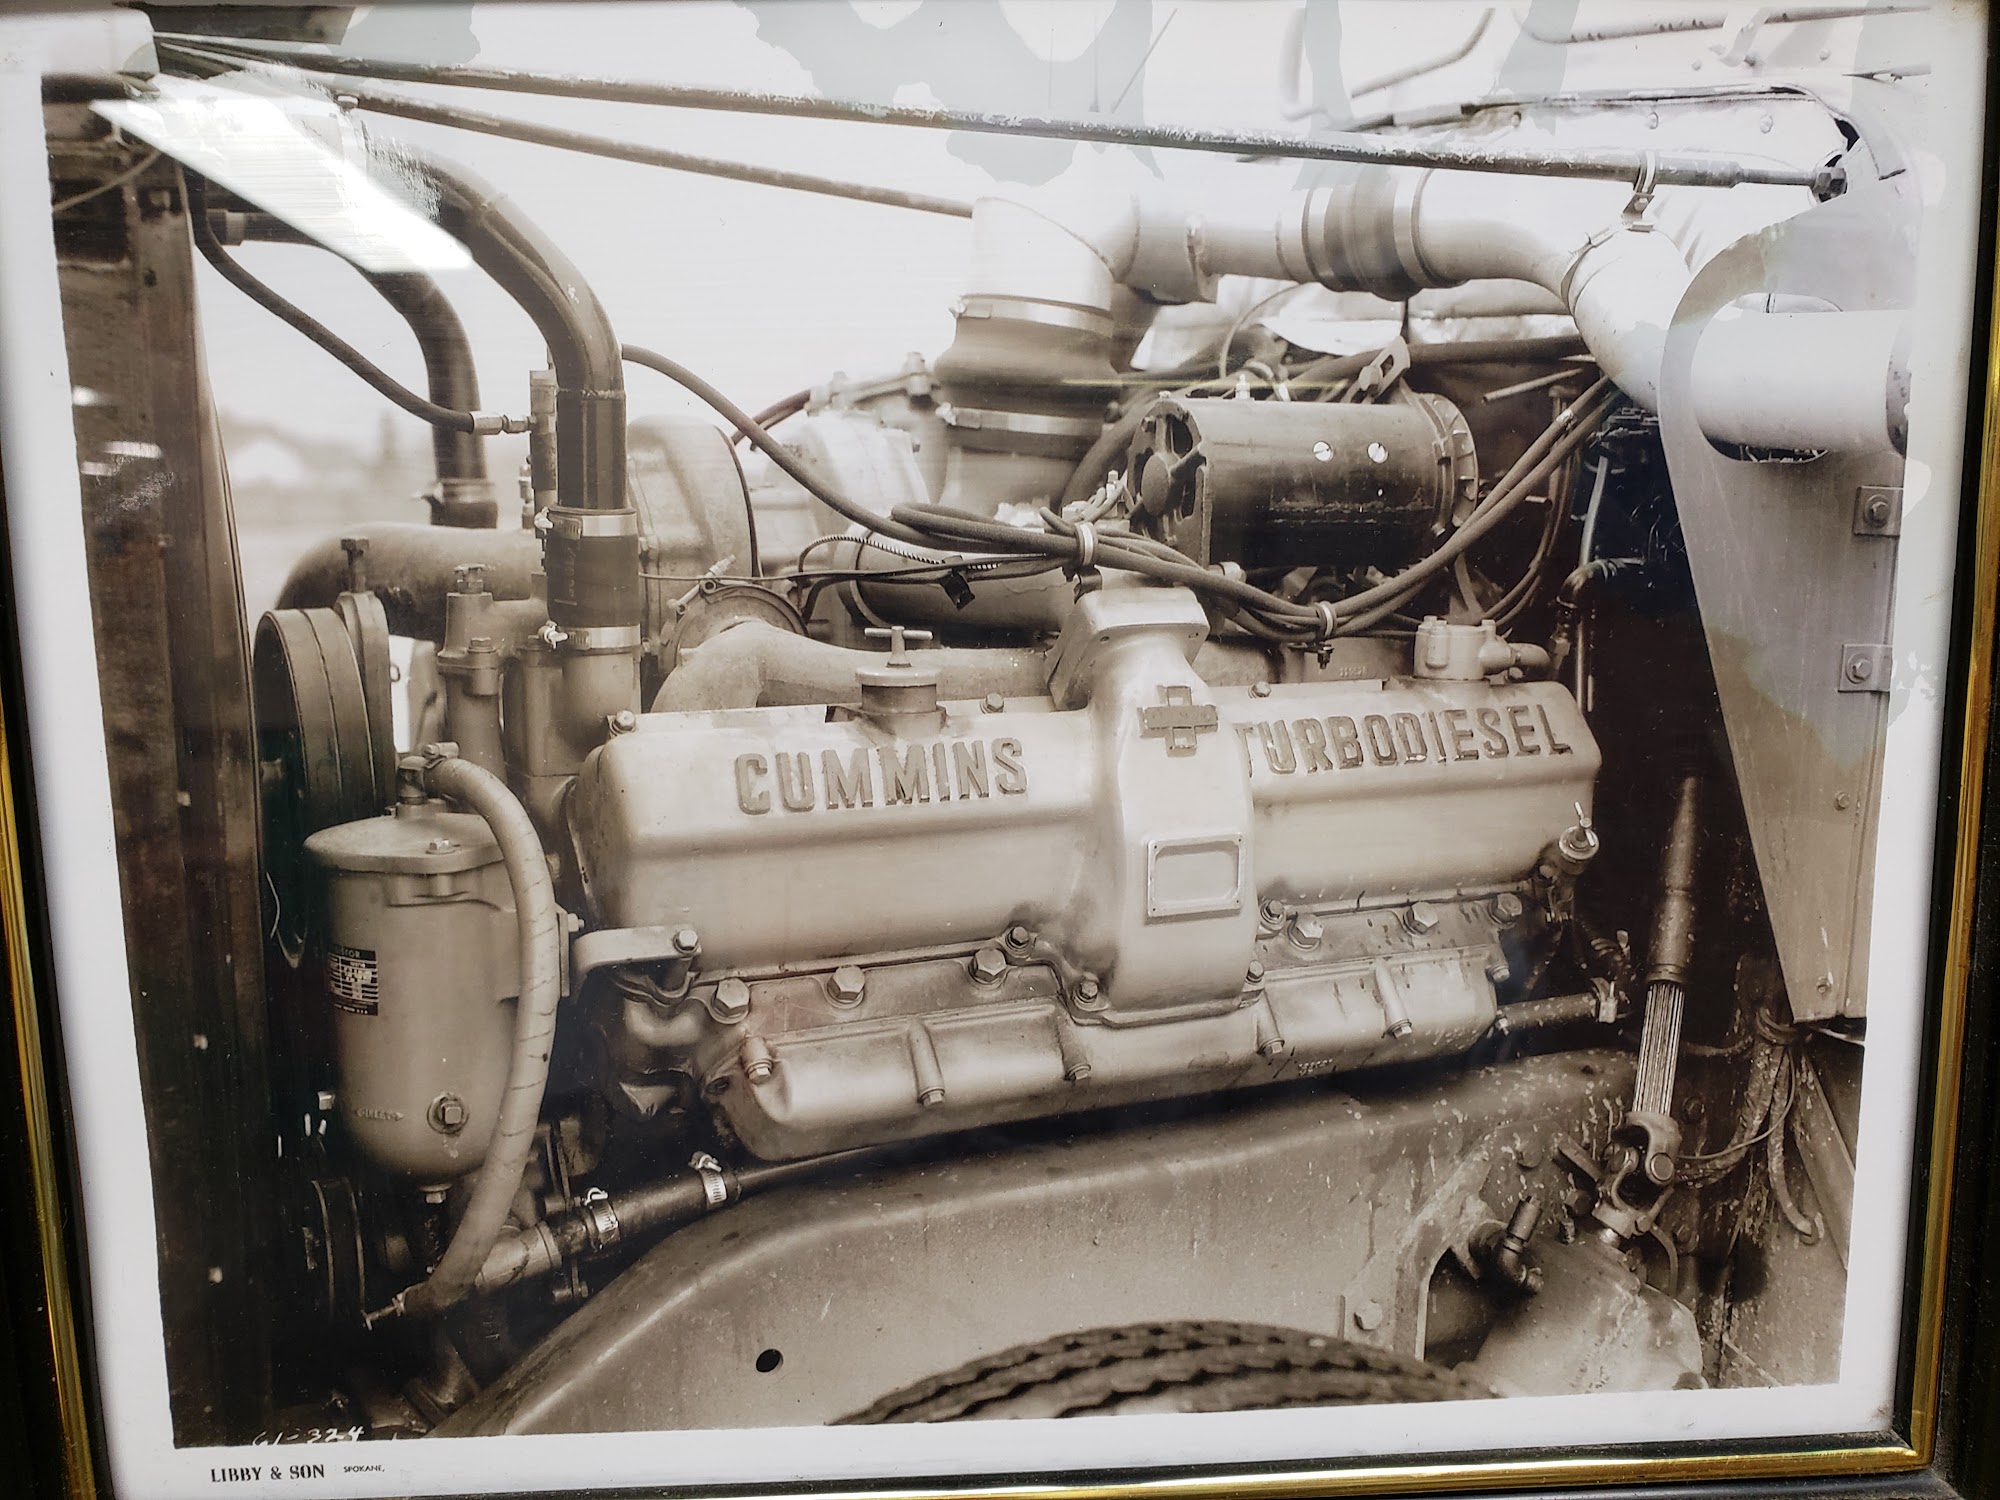 Grate's Wrecker Service 1485 IN-9, LaGrange Indiana 46761